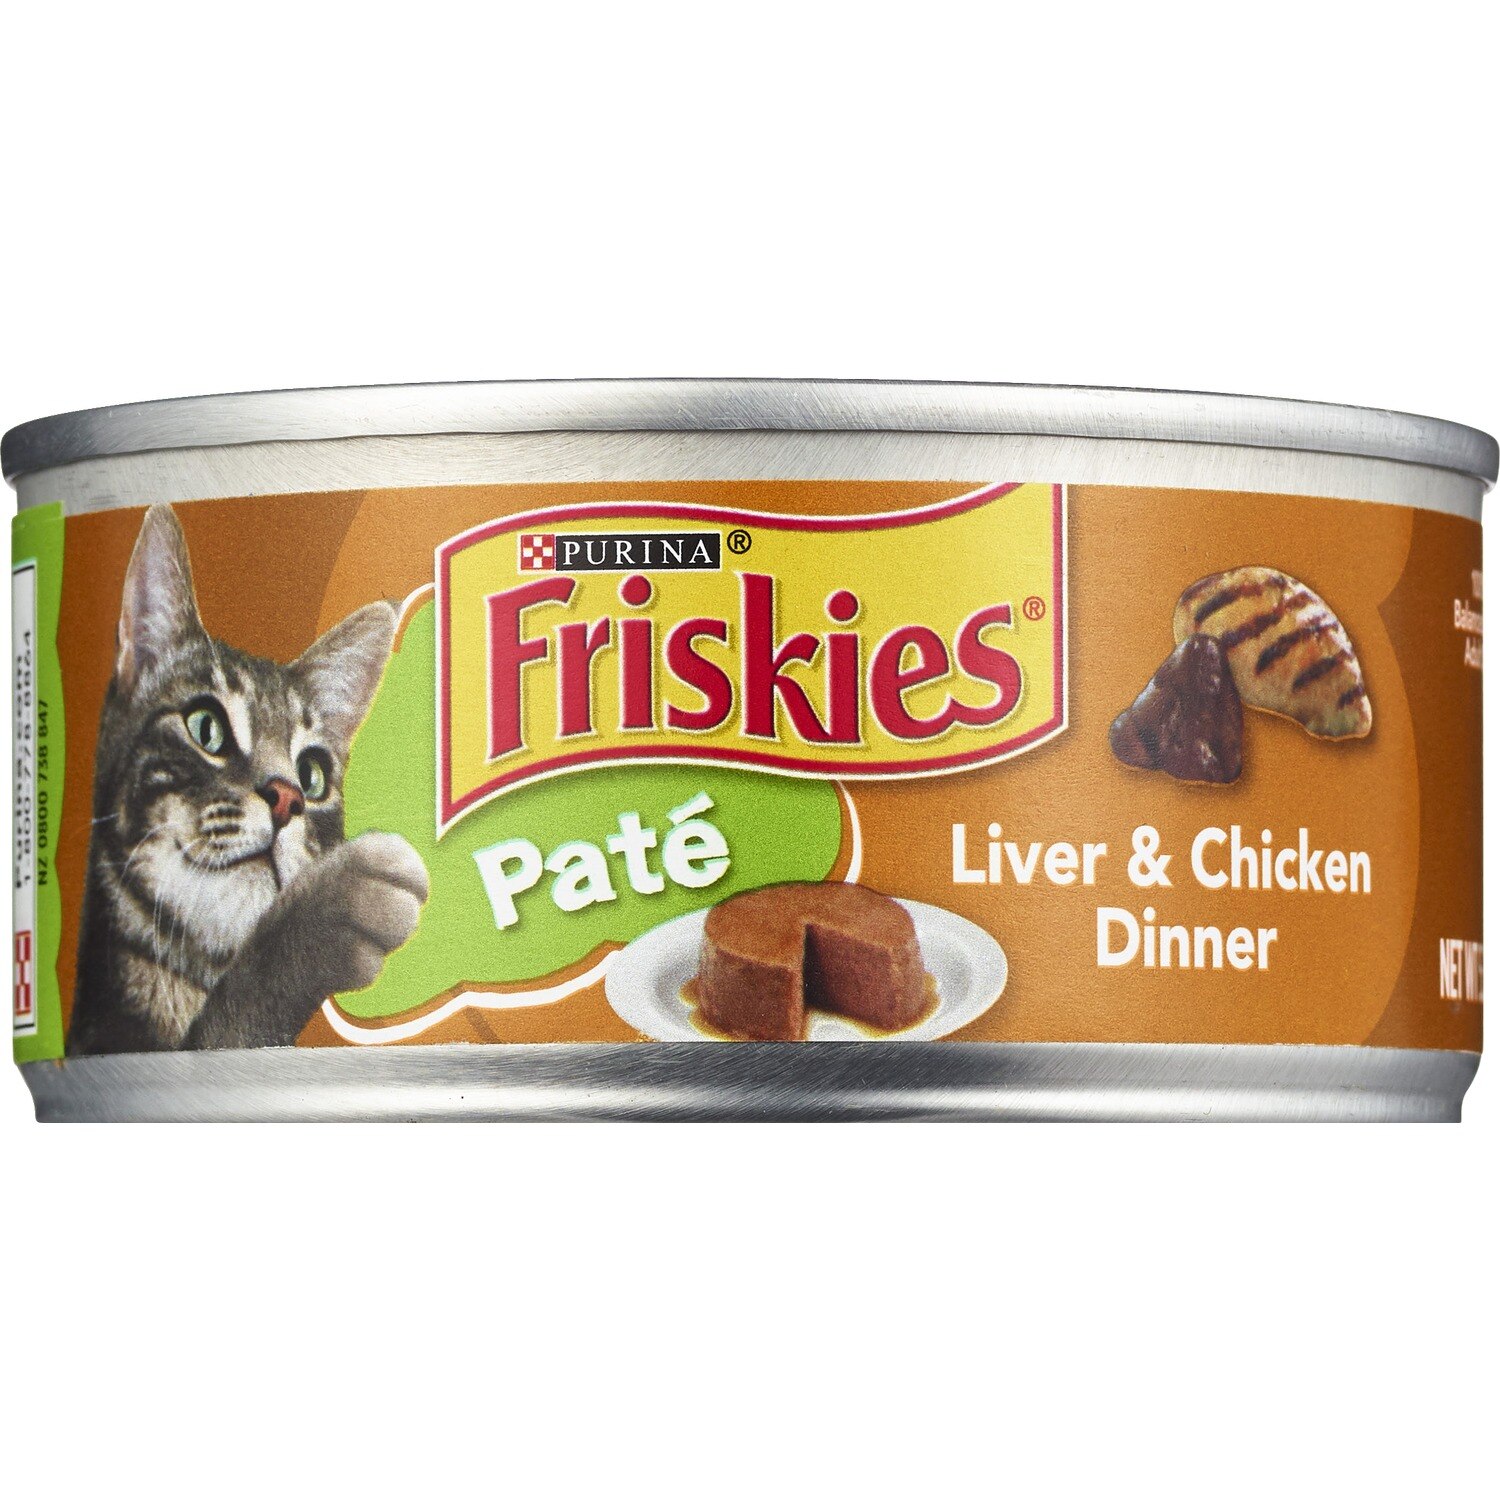 Friskies Classic Pate, Liver & Chicken Dinner